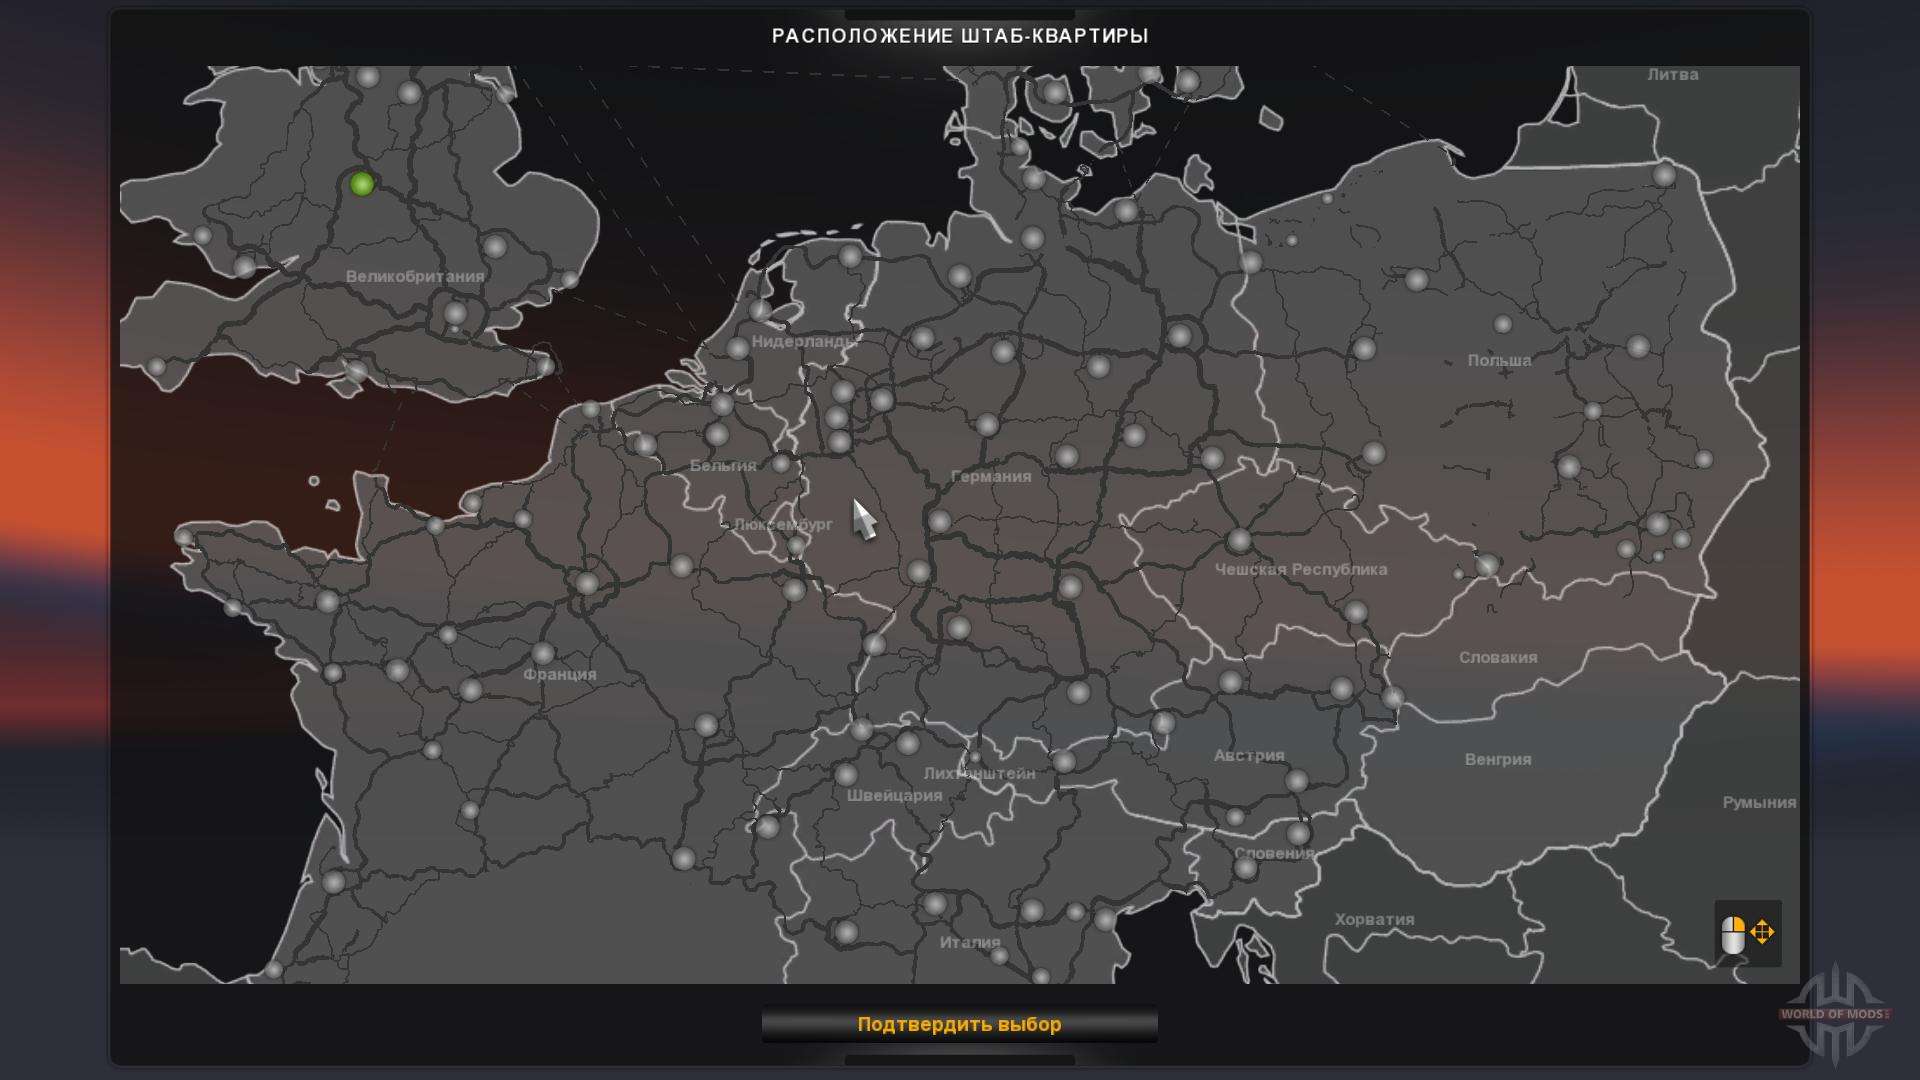 Euro Truck Simulator 2 Mods Maps Europe Asia